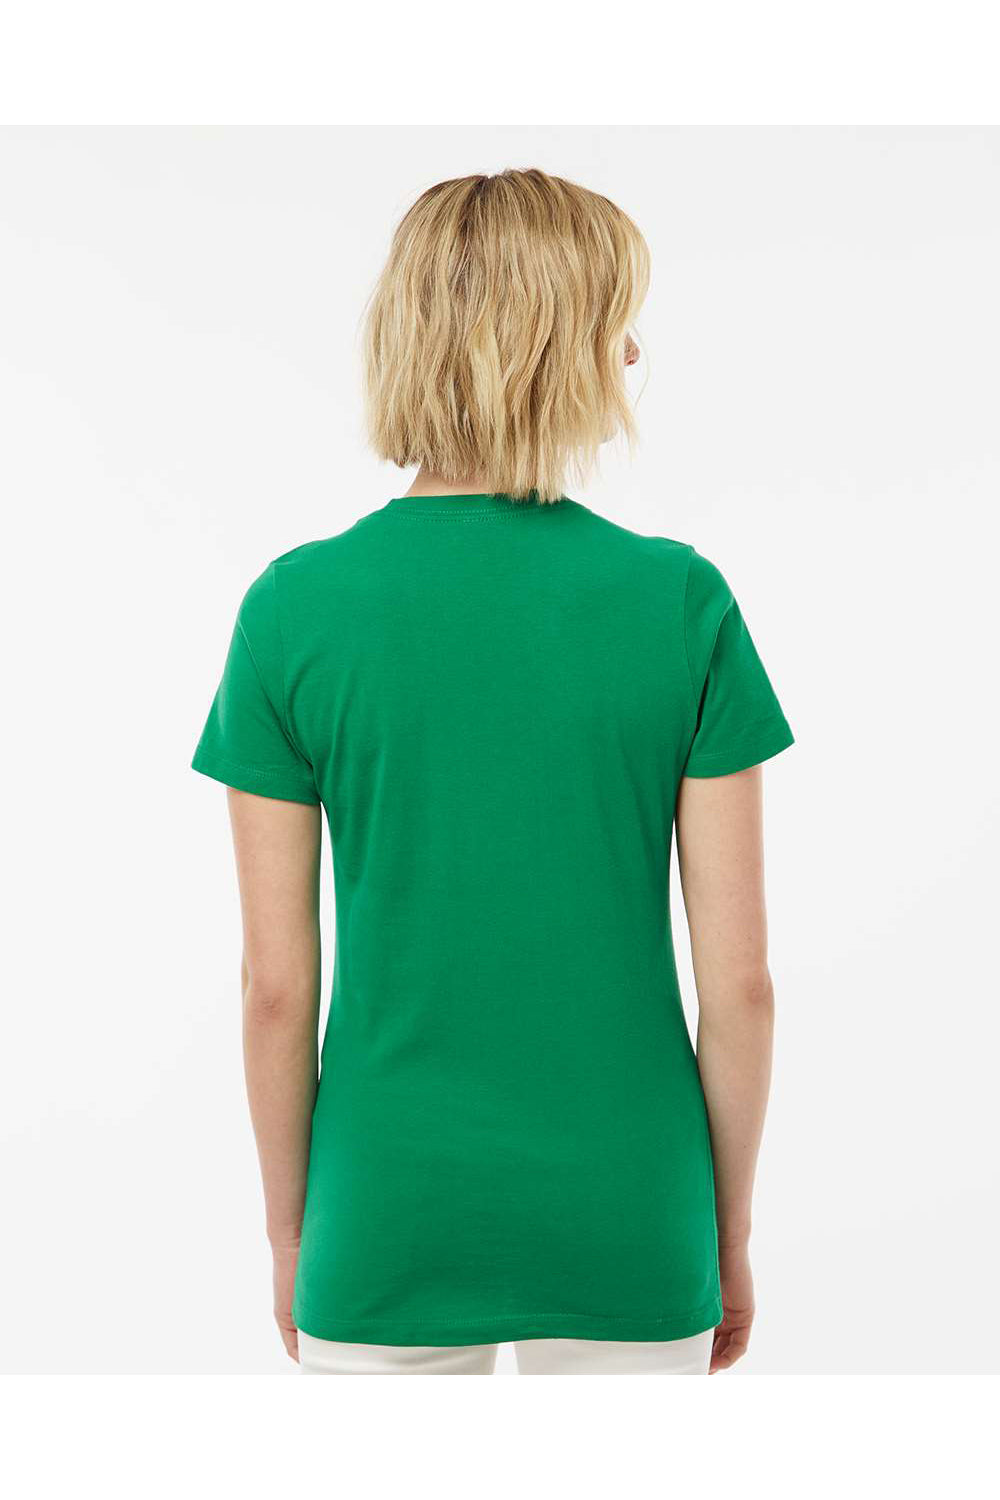 Tultex 516 Womens Premium Short Sleeve Crewneck T-Shirt Kelly Green Model Back